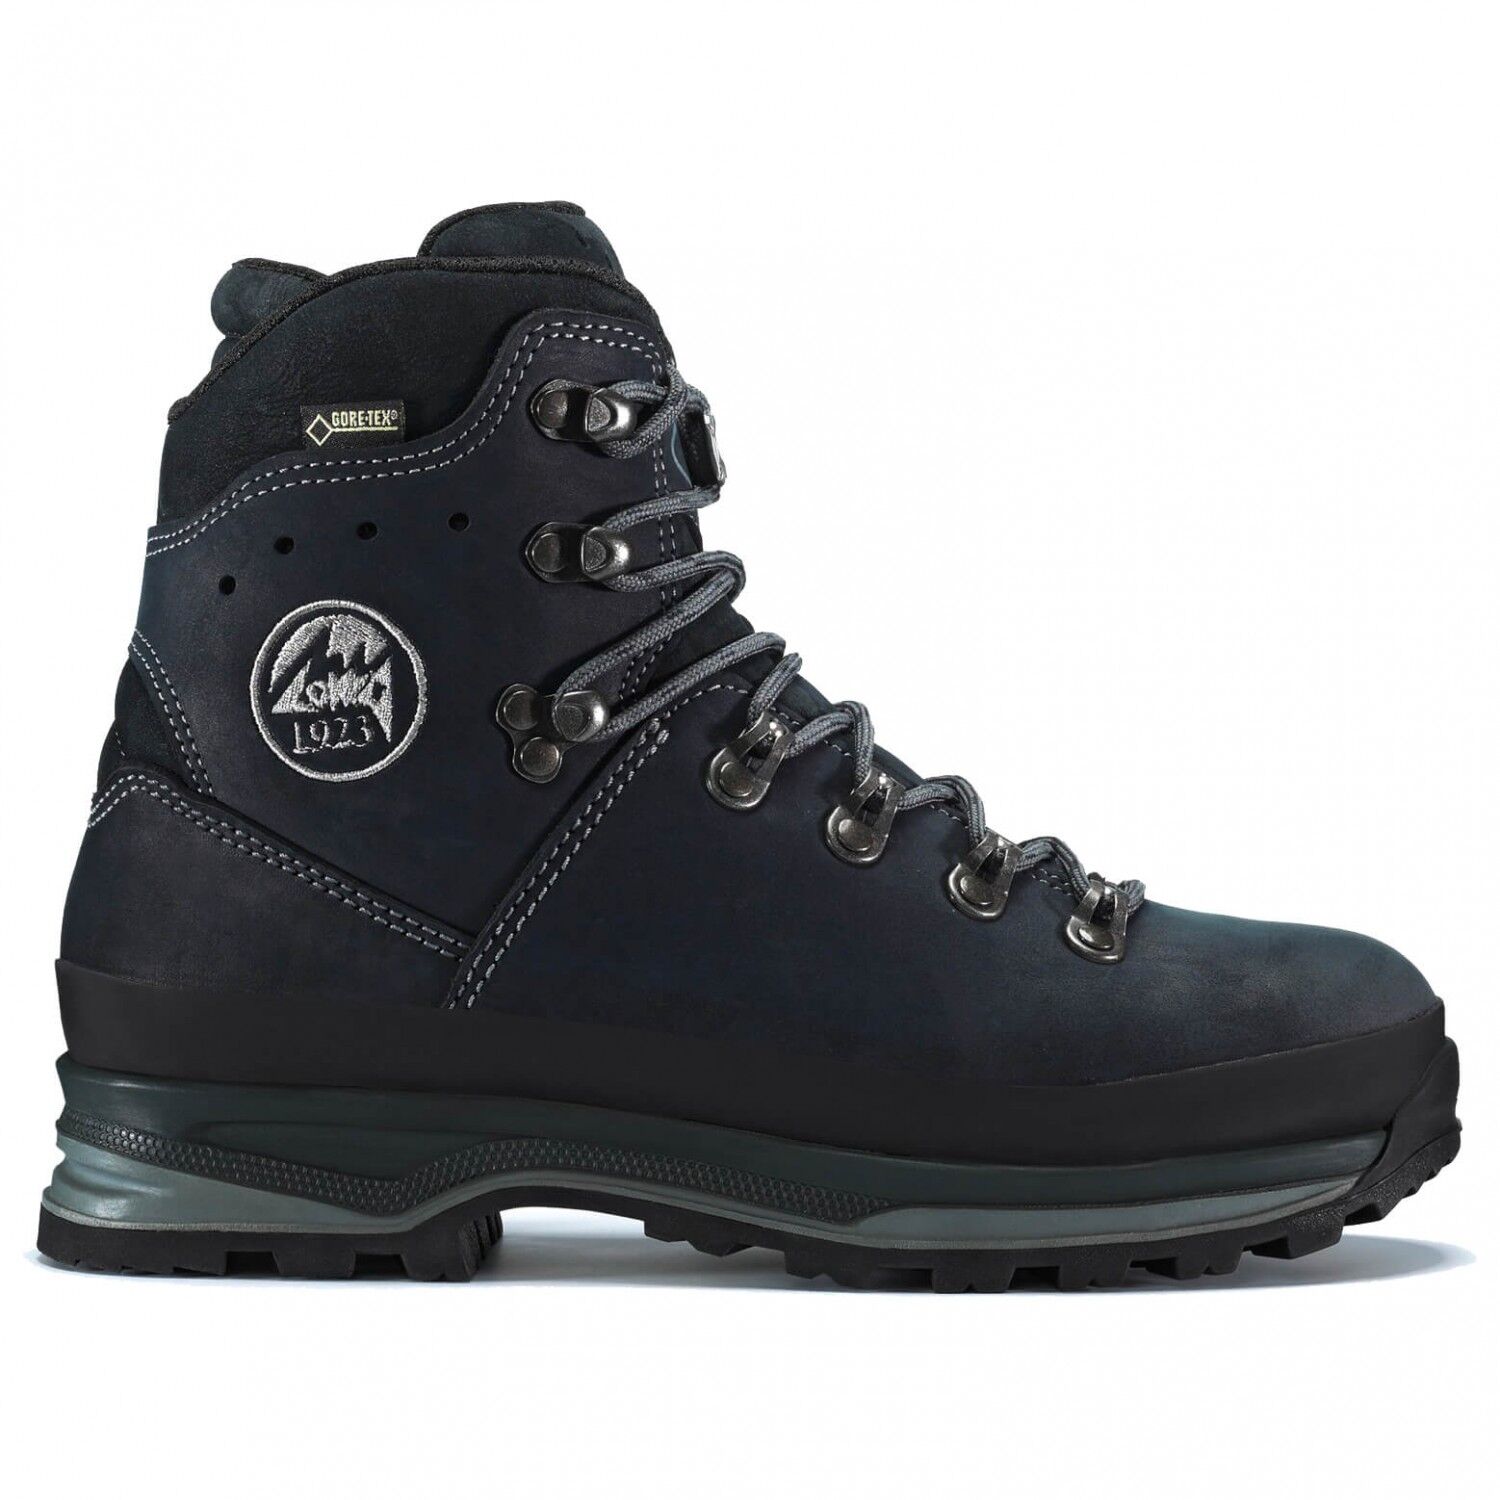 Lowa - Lady III GTX® WXL - Hiking Boots - Women's